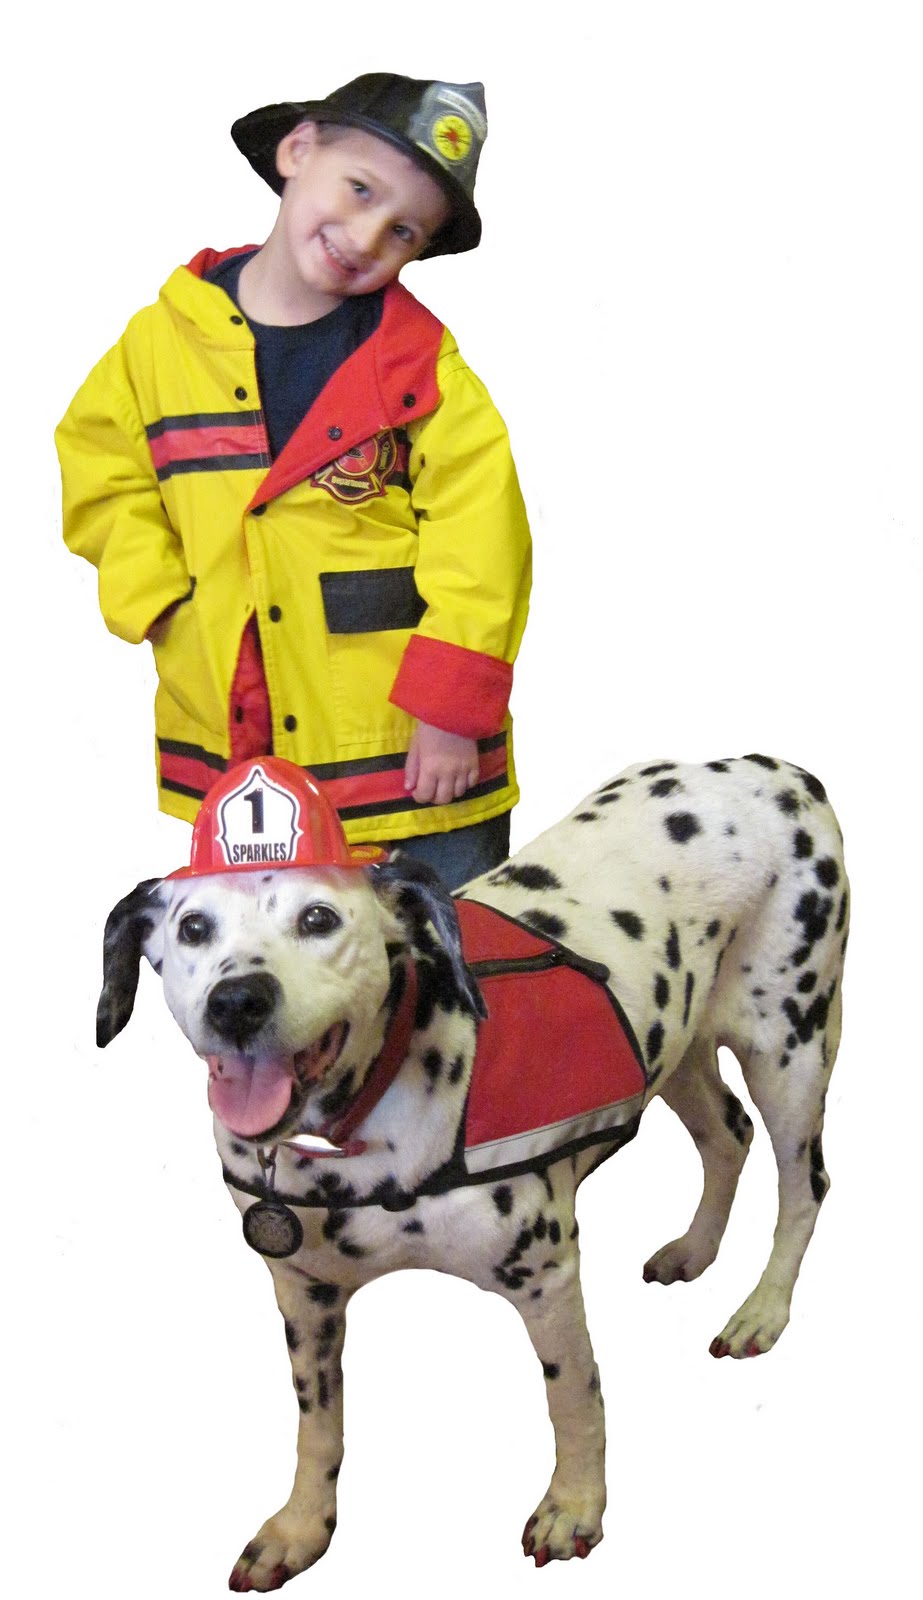 Sparkles the Fire Safety Dog: About Sparkles the Fire Safety Dog